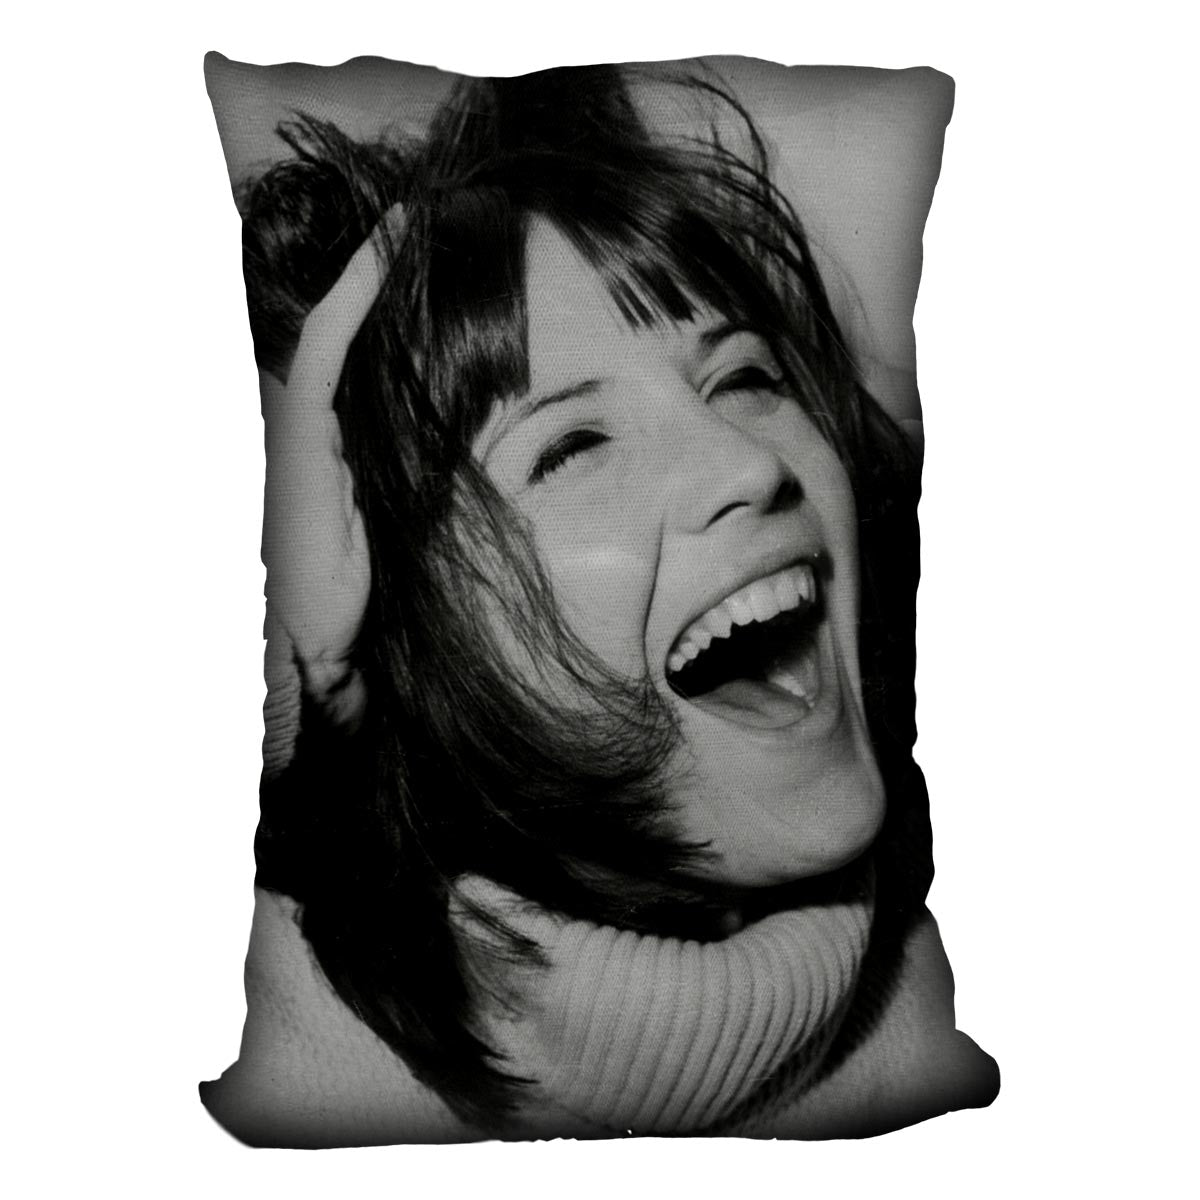 Sandie Shaw laughing Cushion